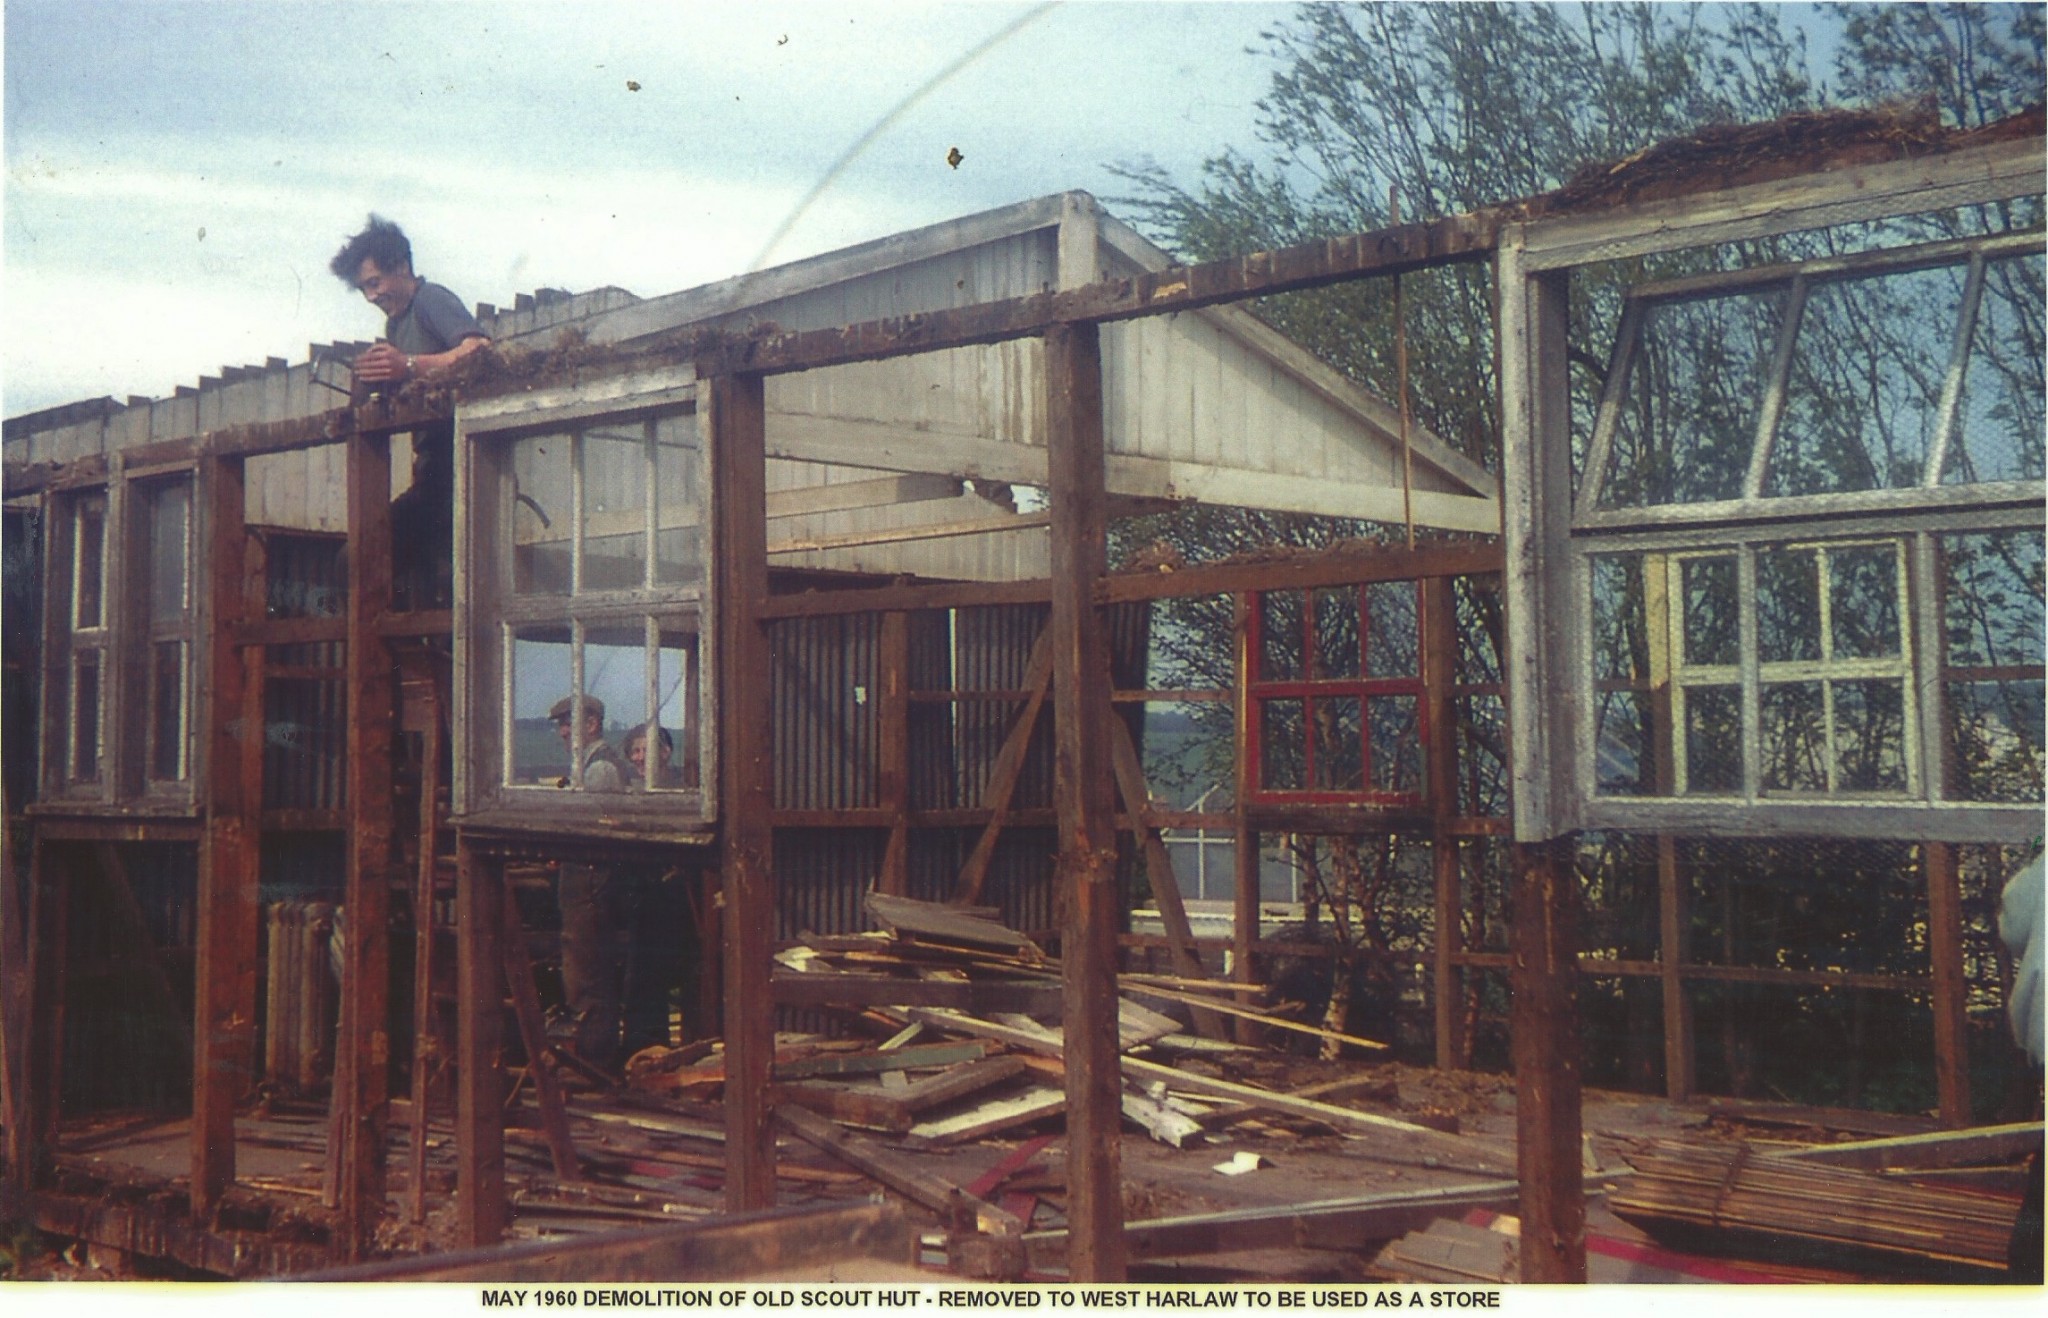 Demolition of old scout hut